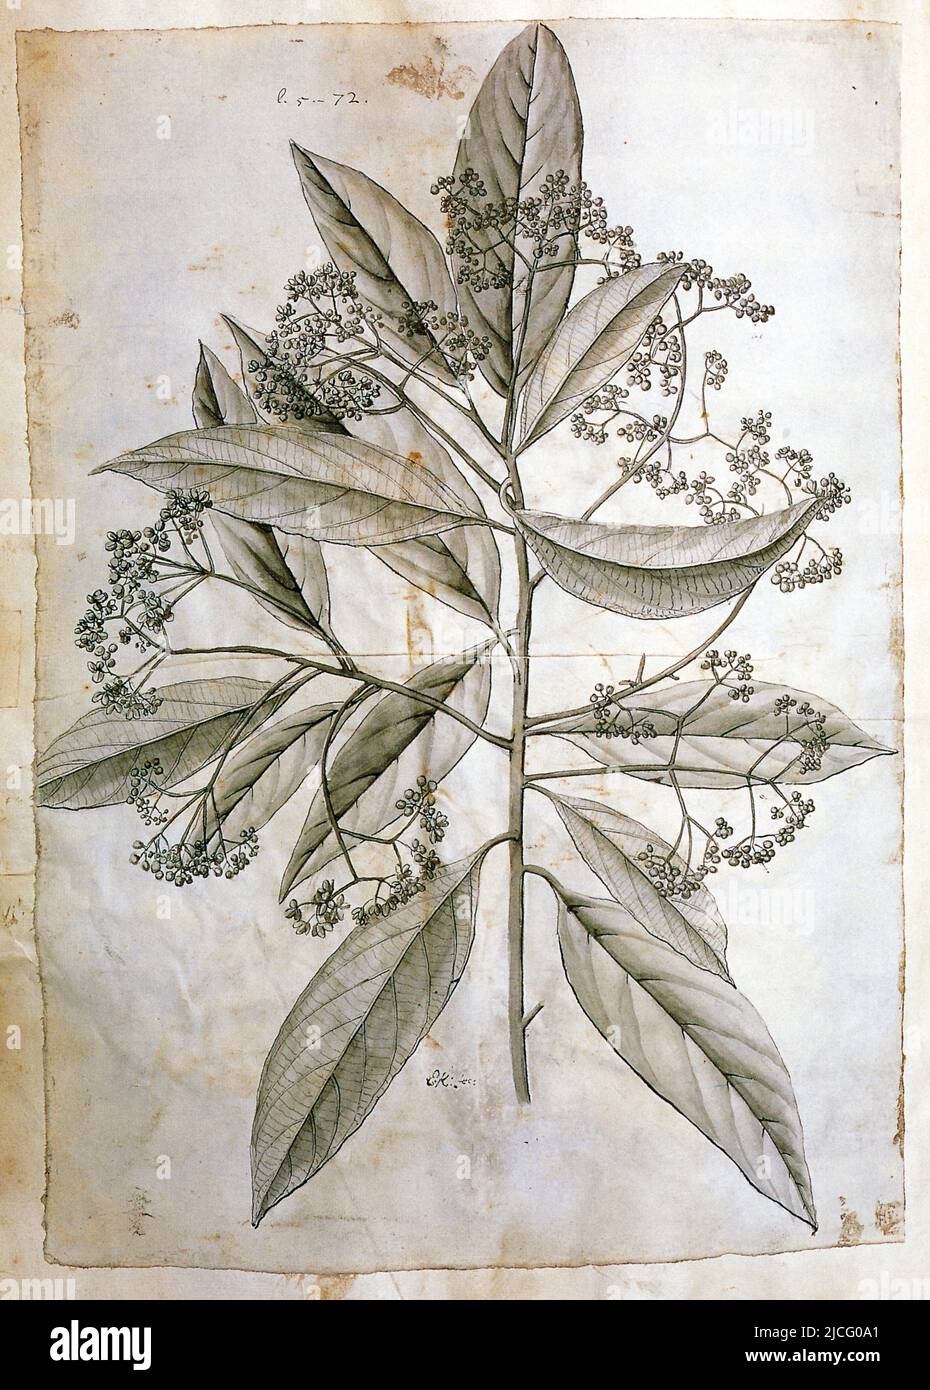 Laurus folio longiore, flore hexapetalo racemoso, fructu humidiore. Nectandra antillana Stock Photo